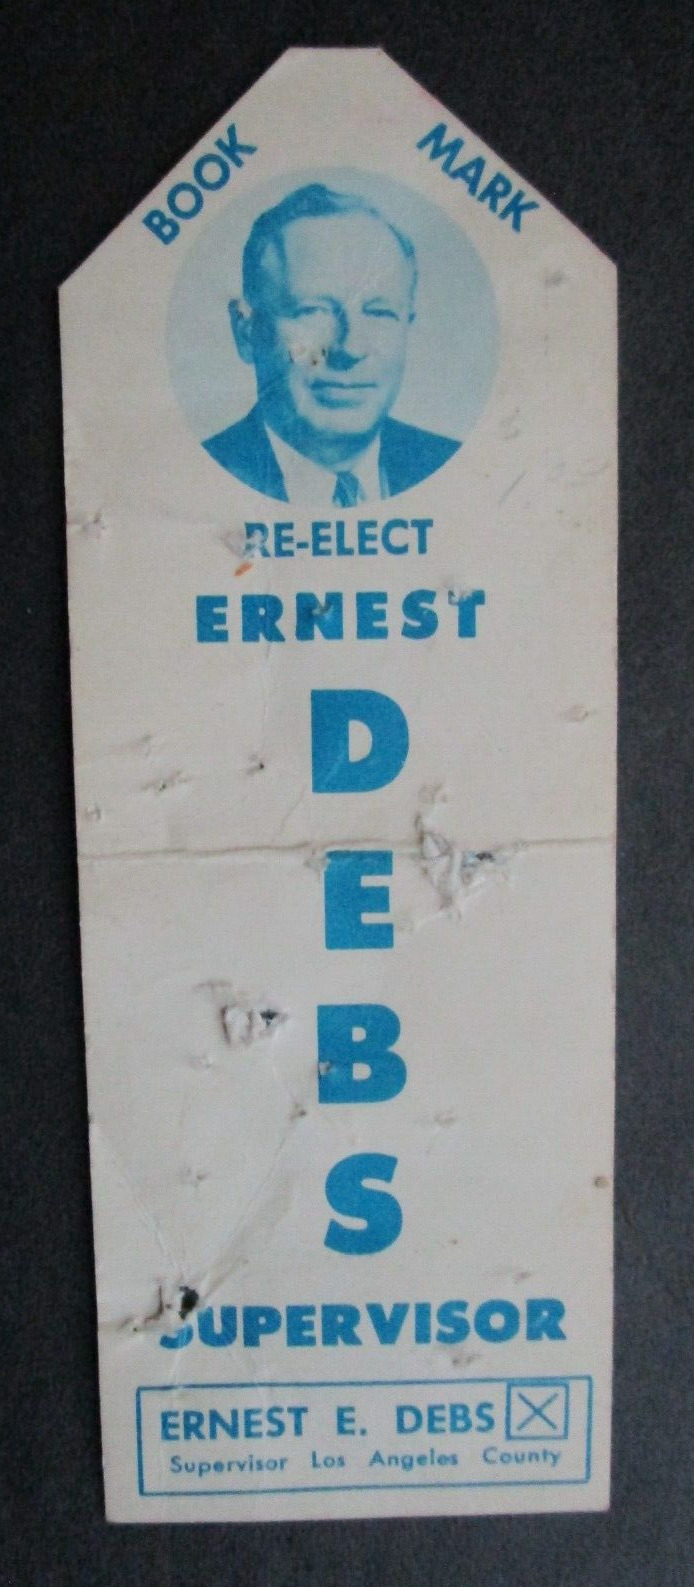 ERNEST DEBBS - Los Angeles, Ca. - Candidate for Supervisor - Bookmark - 1950's